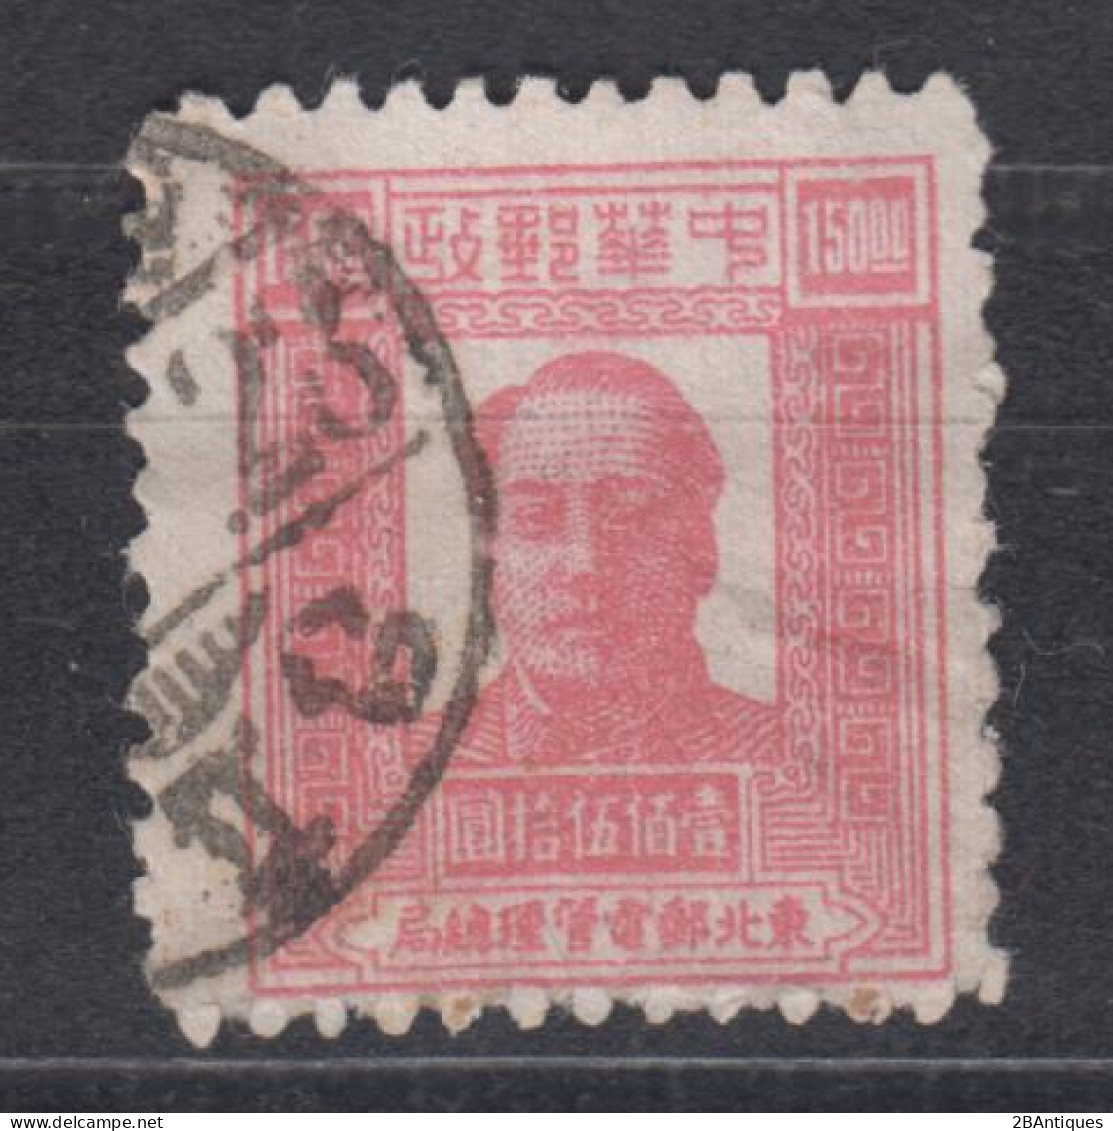 NORTHEAST CHINA 1947 - Mao - North-Eastern 1946-48